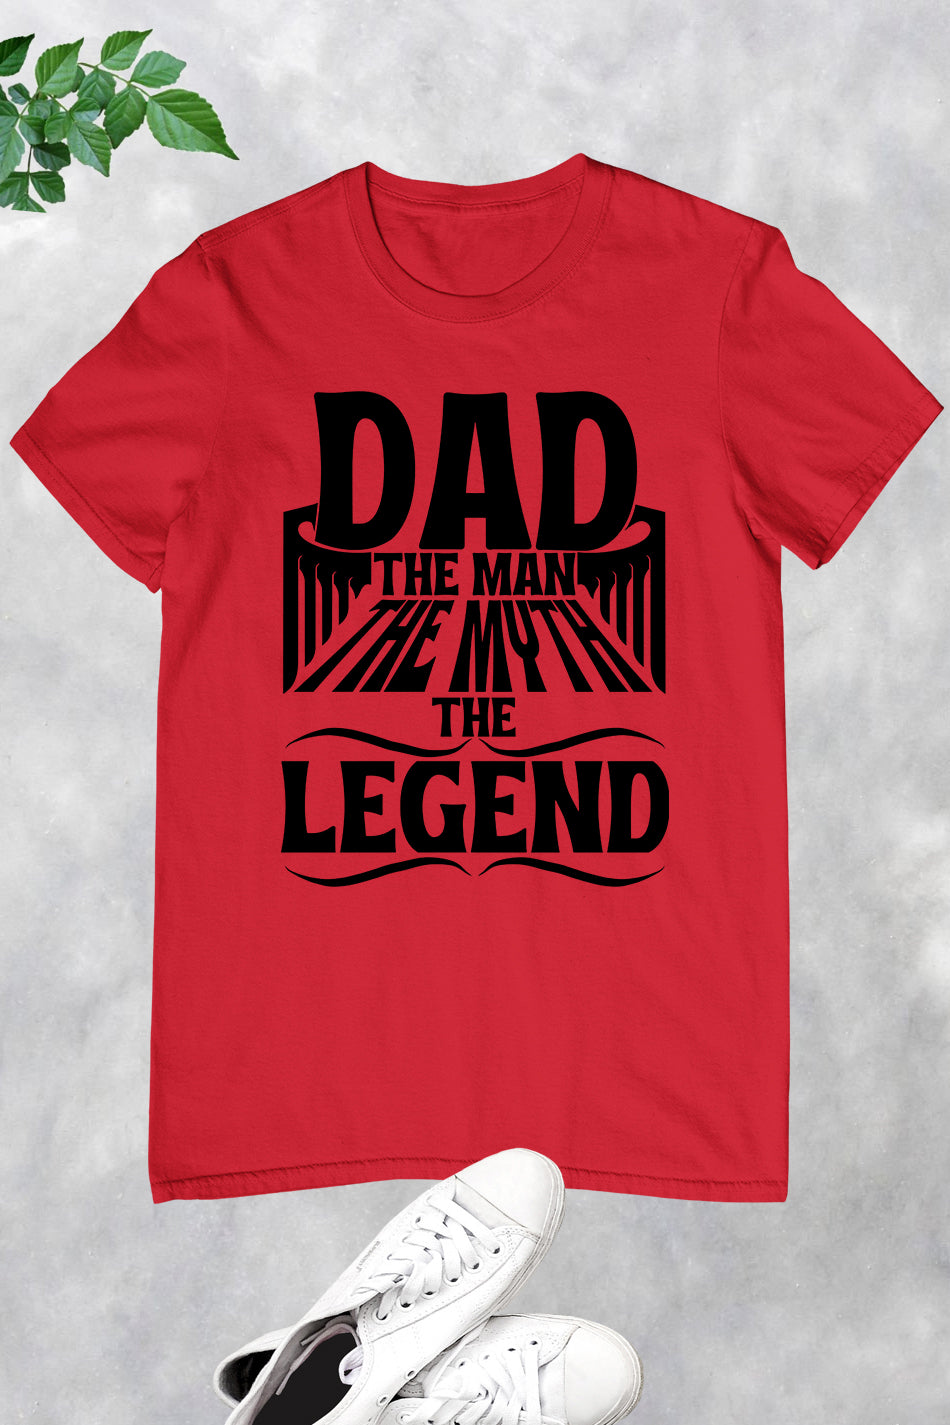 Dad The Man, The Myth, The Legend Shirt